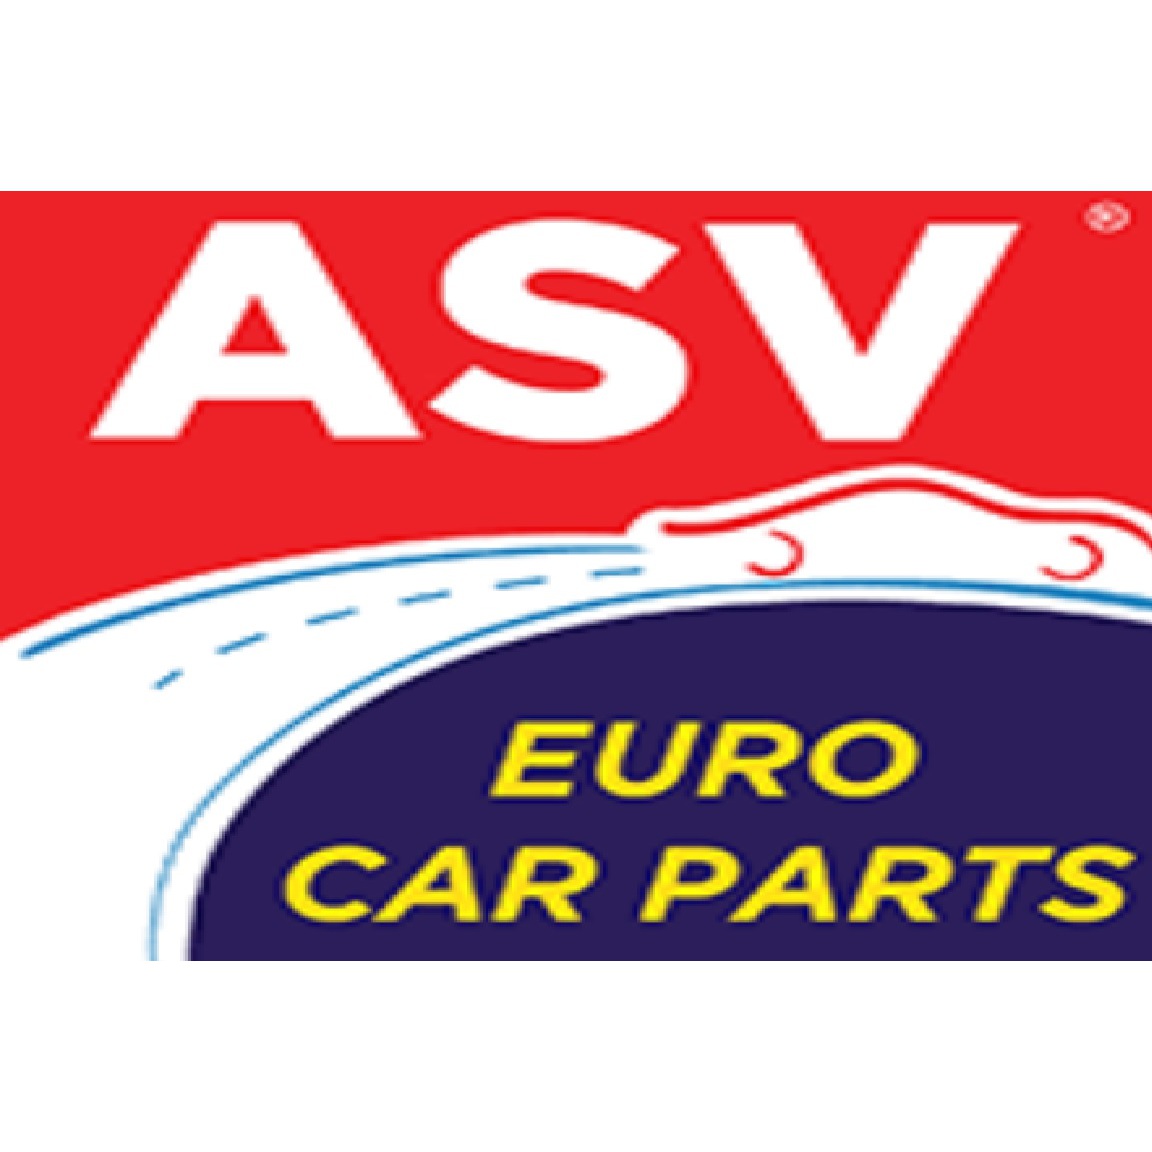 ASV Euro Car Parts - Dry Creek, SA 5094 - (08) 7002 5095 | ShowMeLocal.com